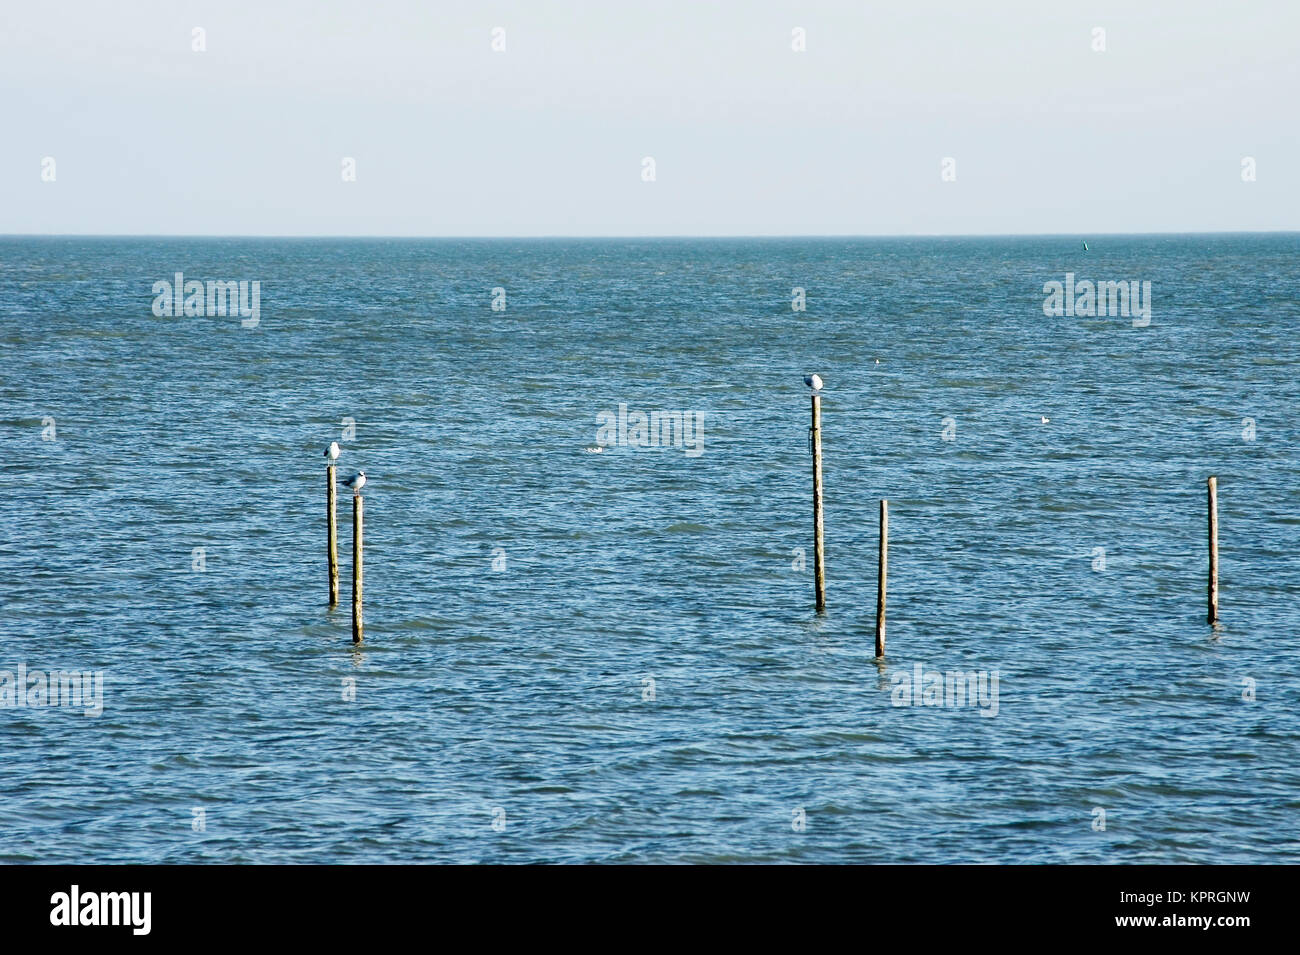 Das Meer, Ijsselmeer, bei Volendam in den Niederlanden mit Reusen von Fischern. Stock Photo